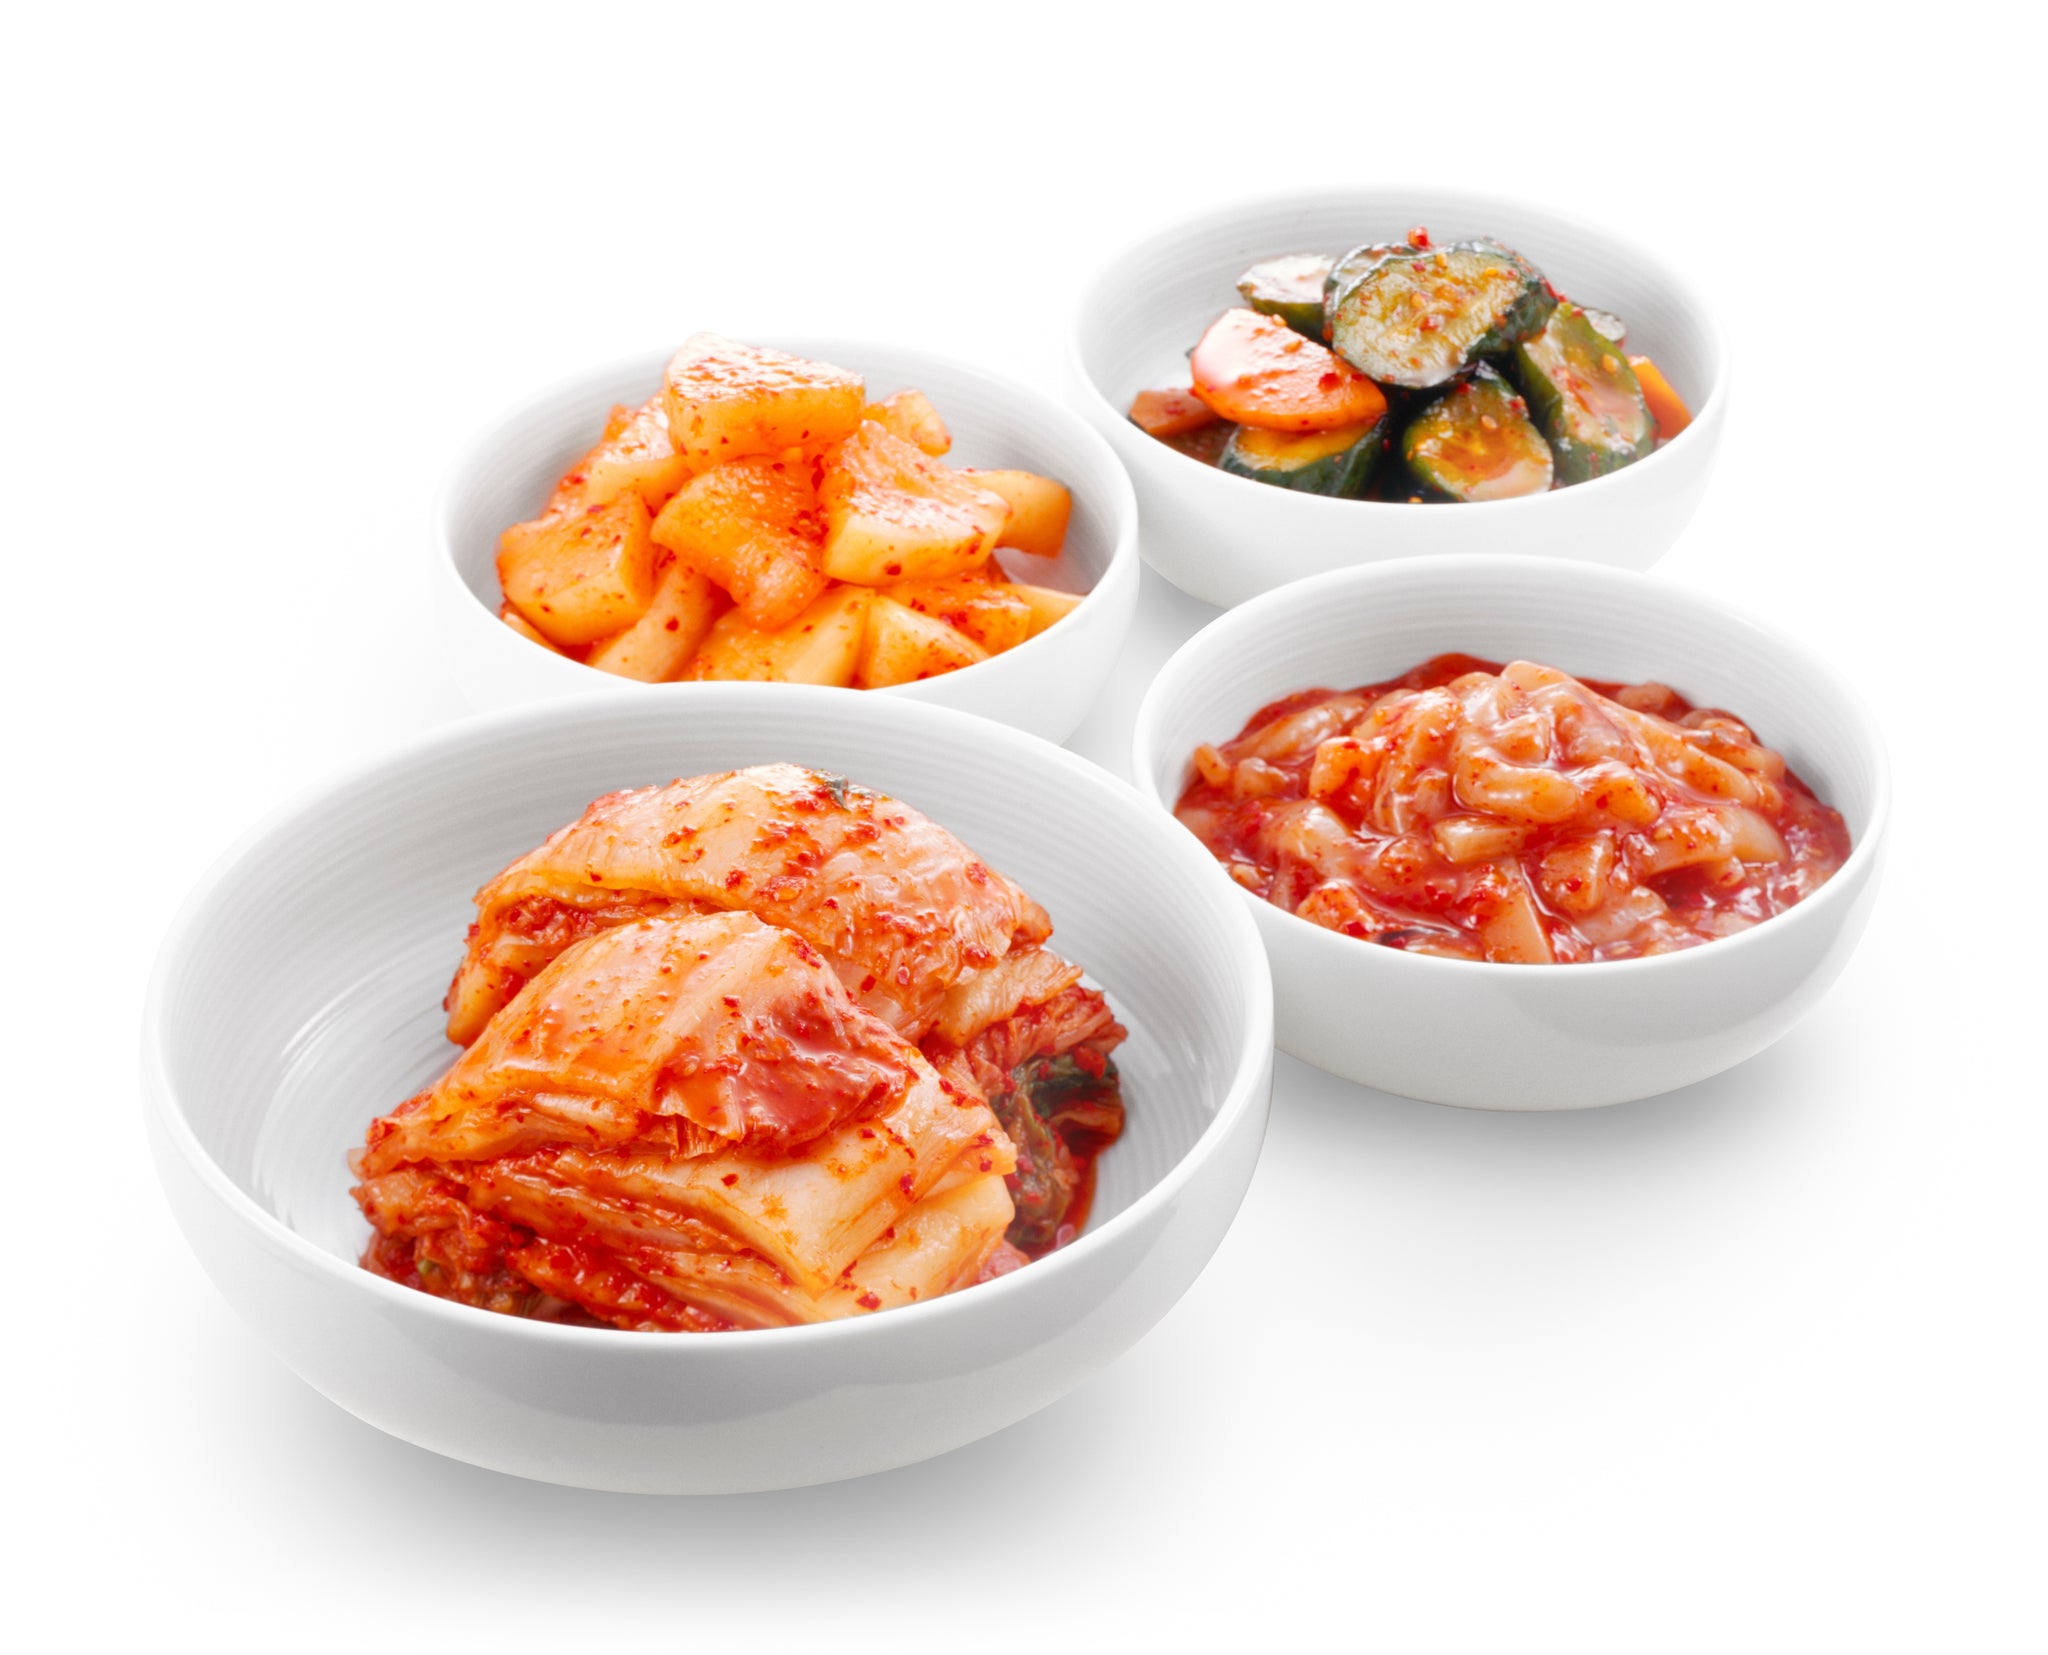 Dimchae Maman 418 Liters Standing Kimchi Refrigerator - Red